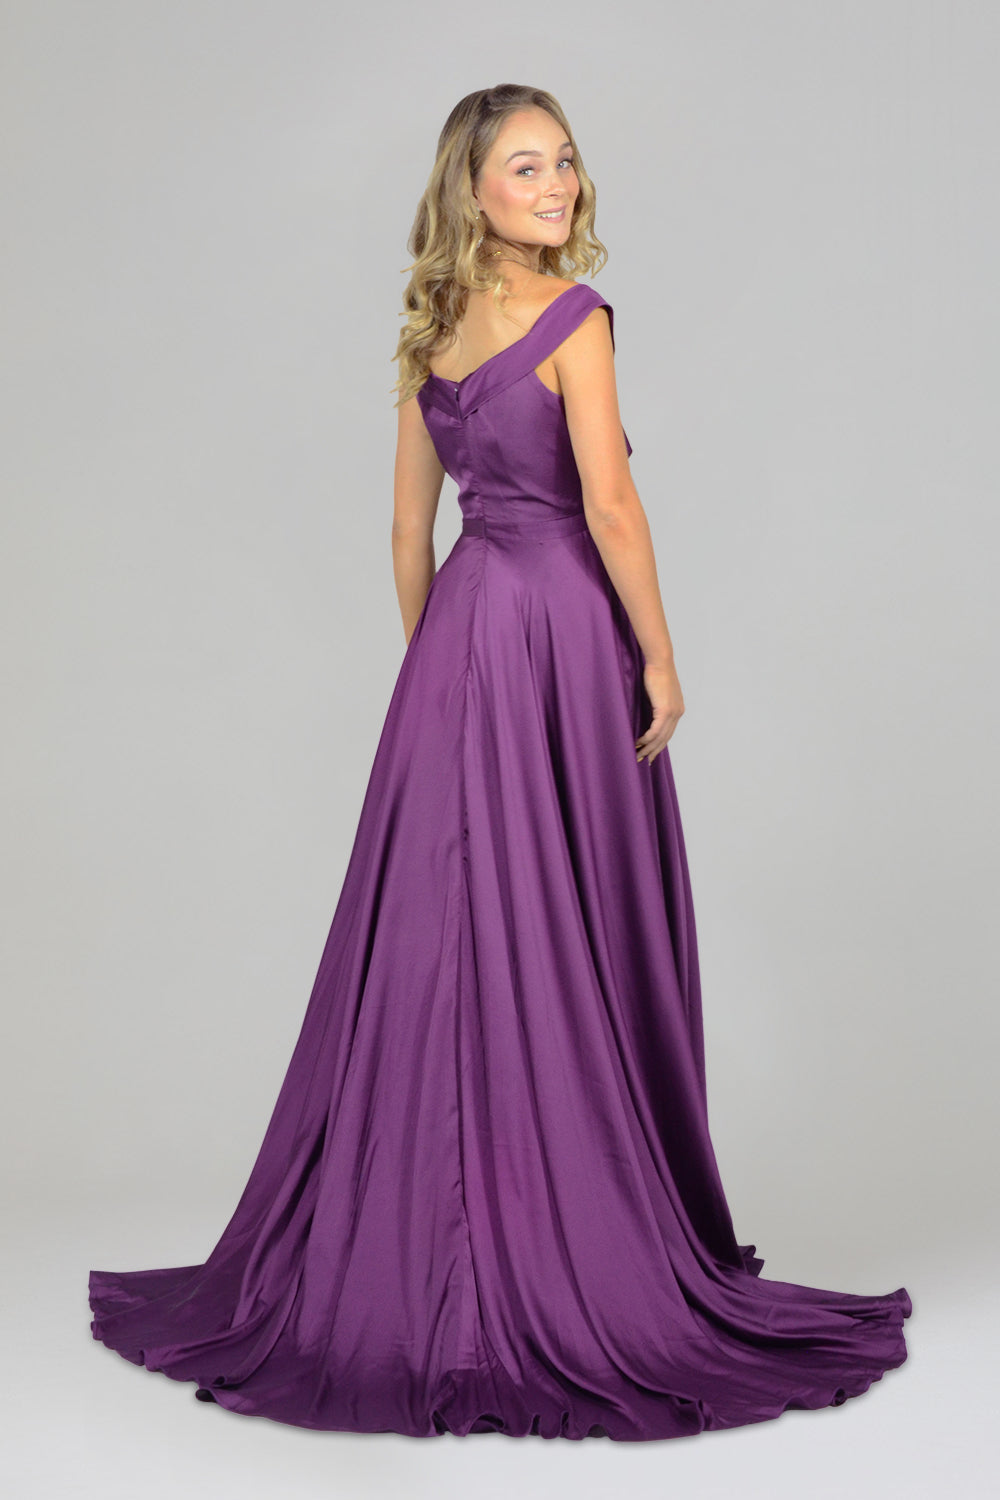 Cinderella Divine CD7487 Long Satin Evening Dress for $125.0 – The Dress  Outlet